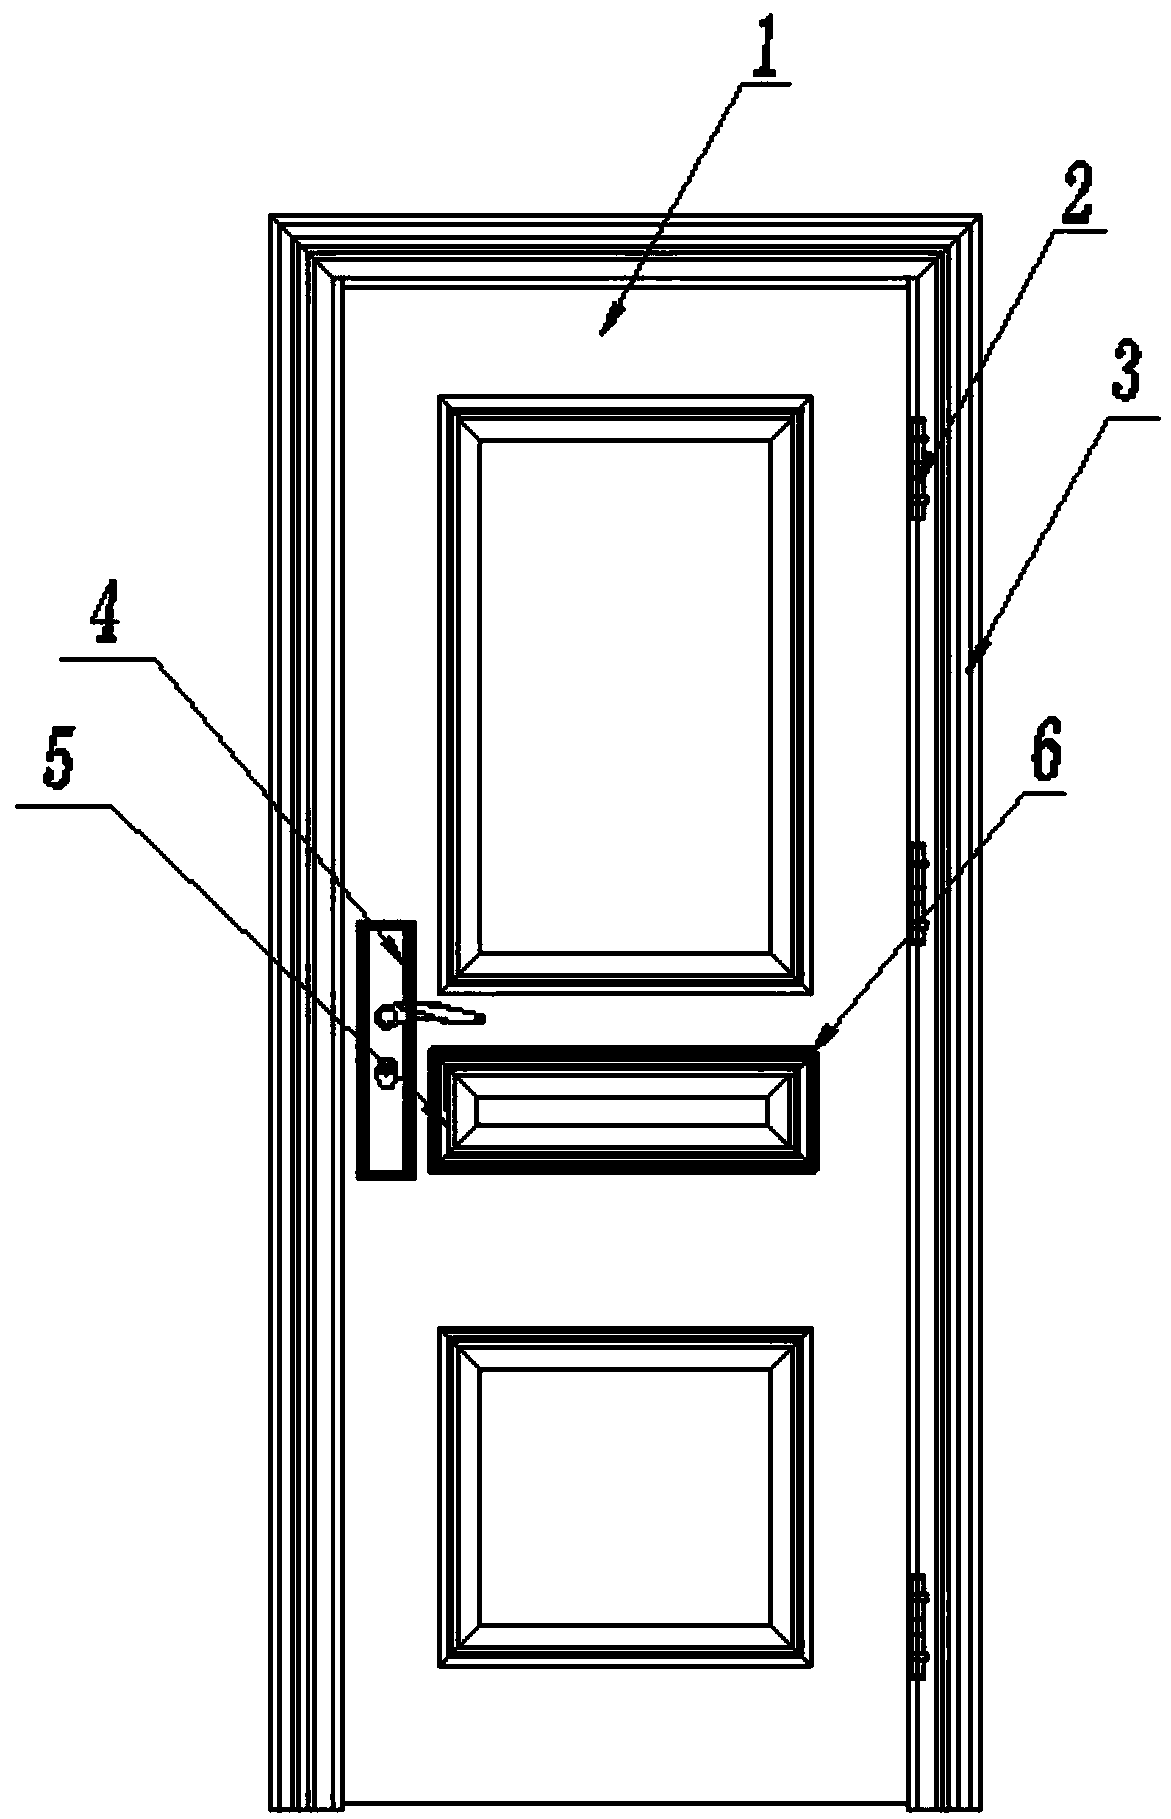 Single-open steel wood armored door facilitating escaping